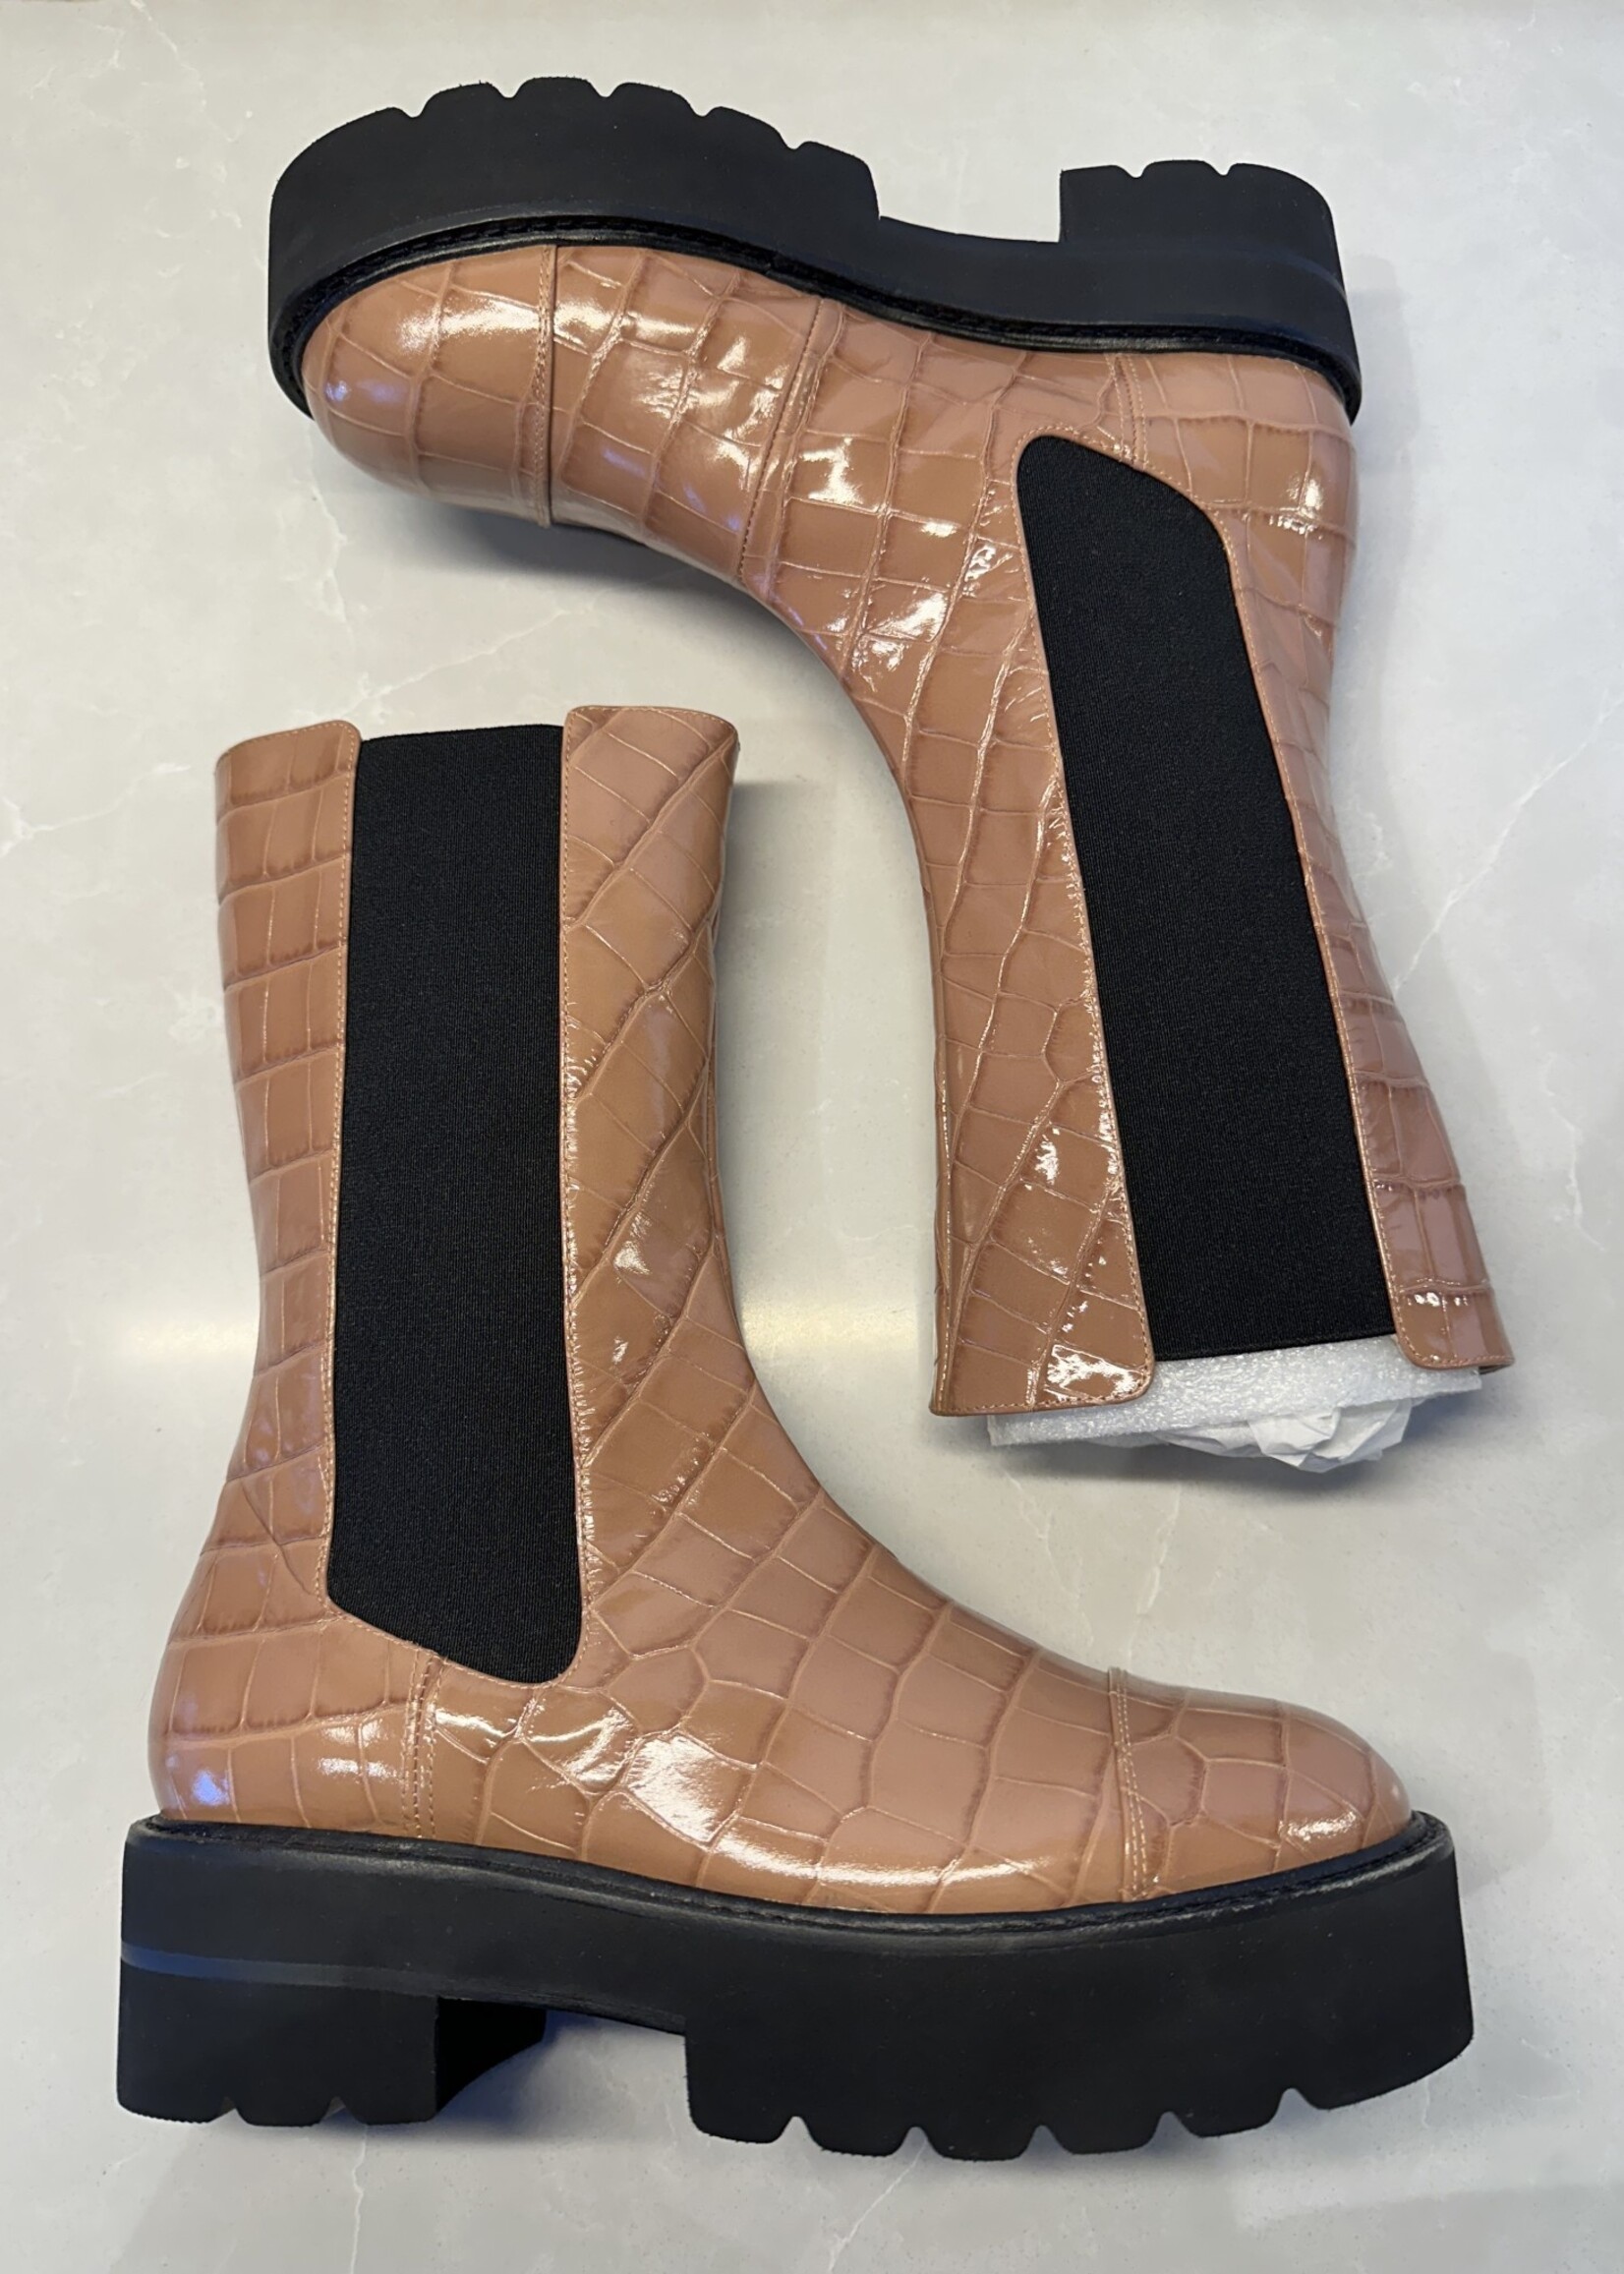 New Stuart Weitzman Croc Chelsea Boots 6.5